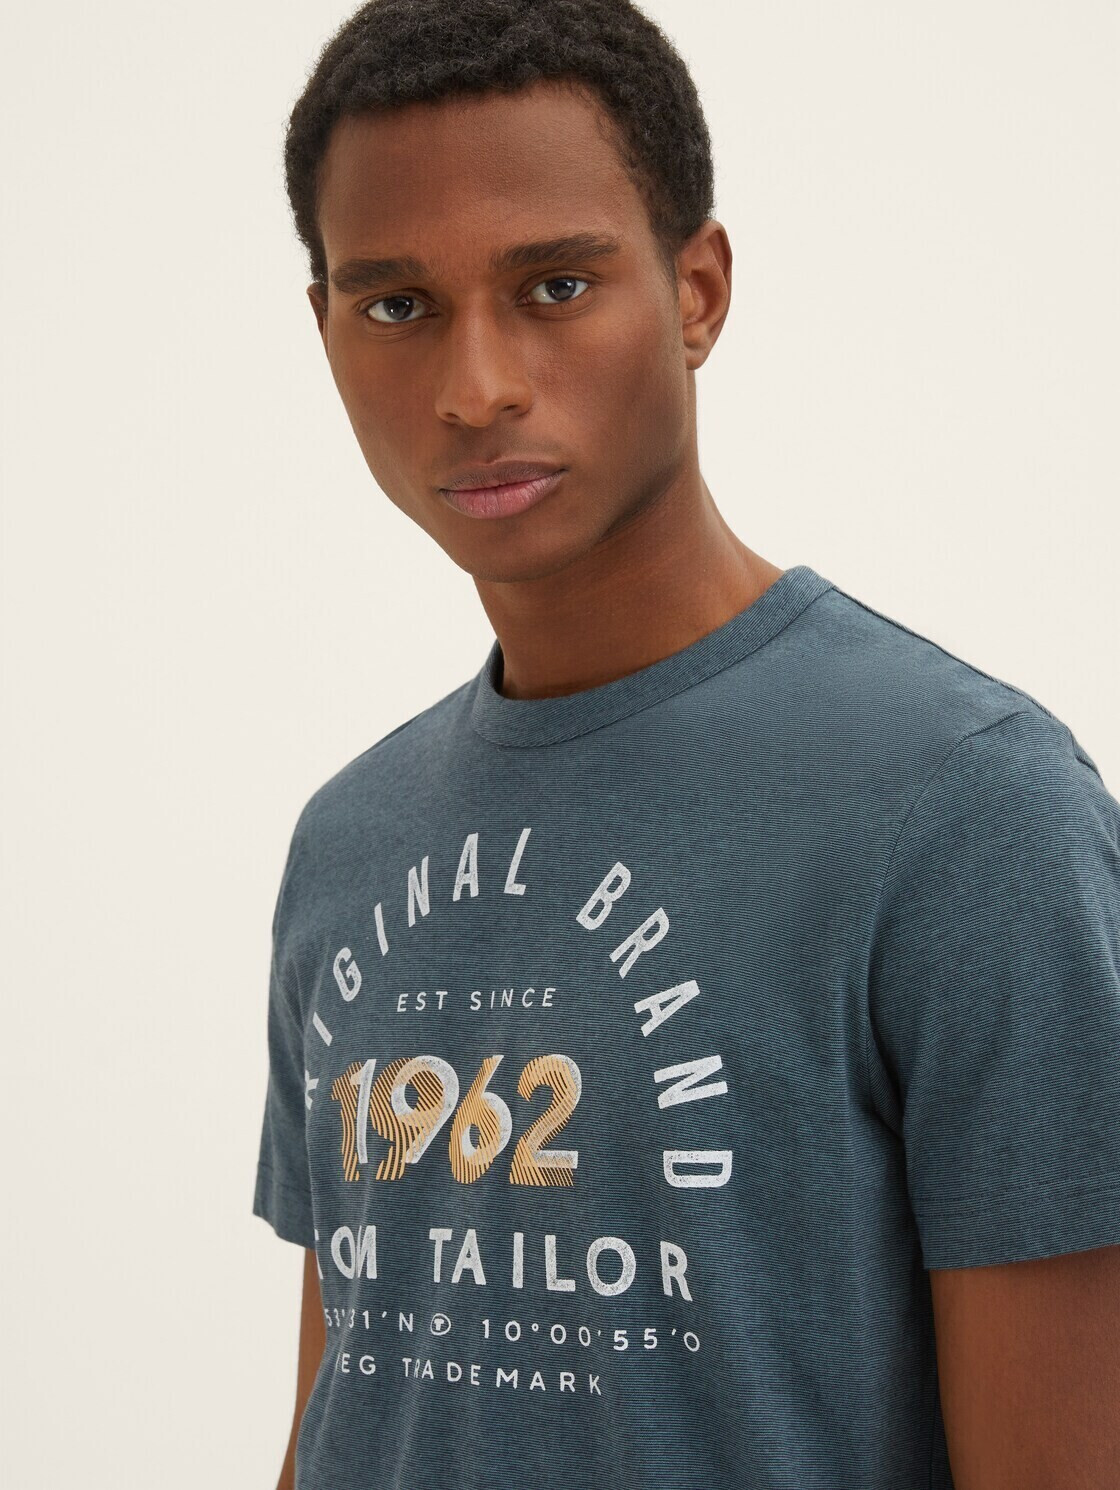 Tailor Print | T-Shirt bei mit ab 15,99 (1035549) Tom blau € Preisvergleich